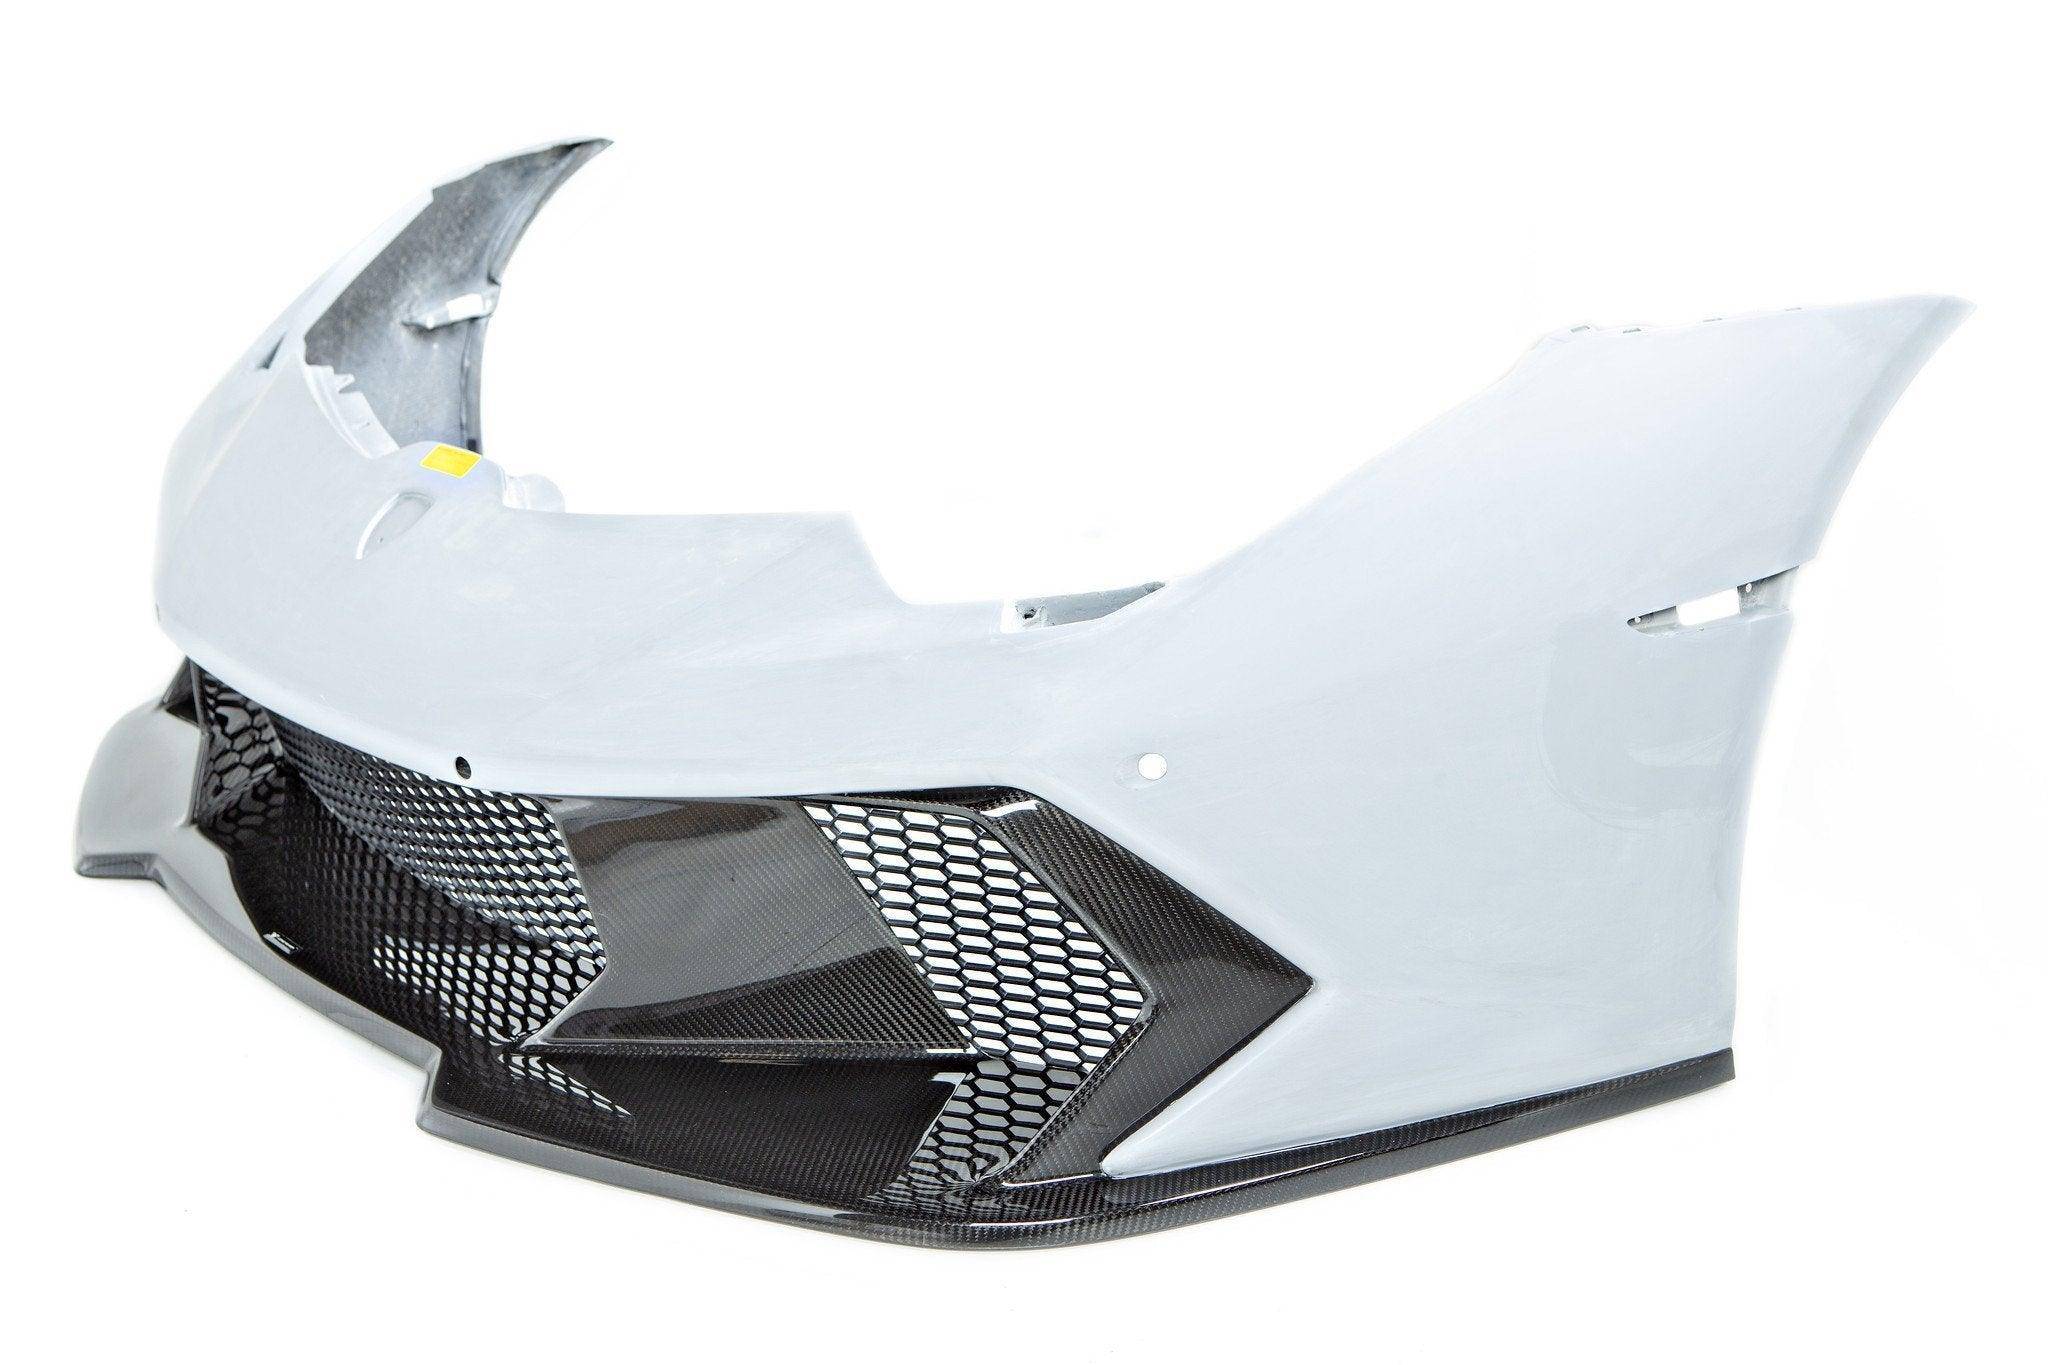 Vorsteiner Carbon Fibre Novara Edizione Front Bumper + Lower Splitter for Lamborghini Huracan (2014-2019), Front & Rear Bumpers, Vorsteiner - AUTOID | Premium Automotive Accessories